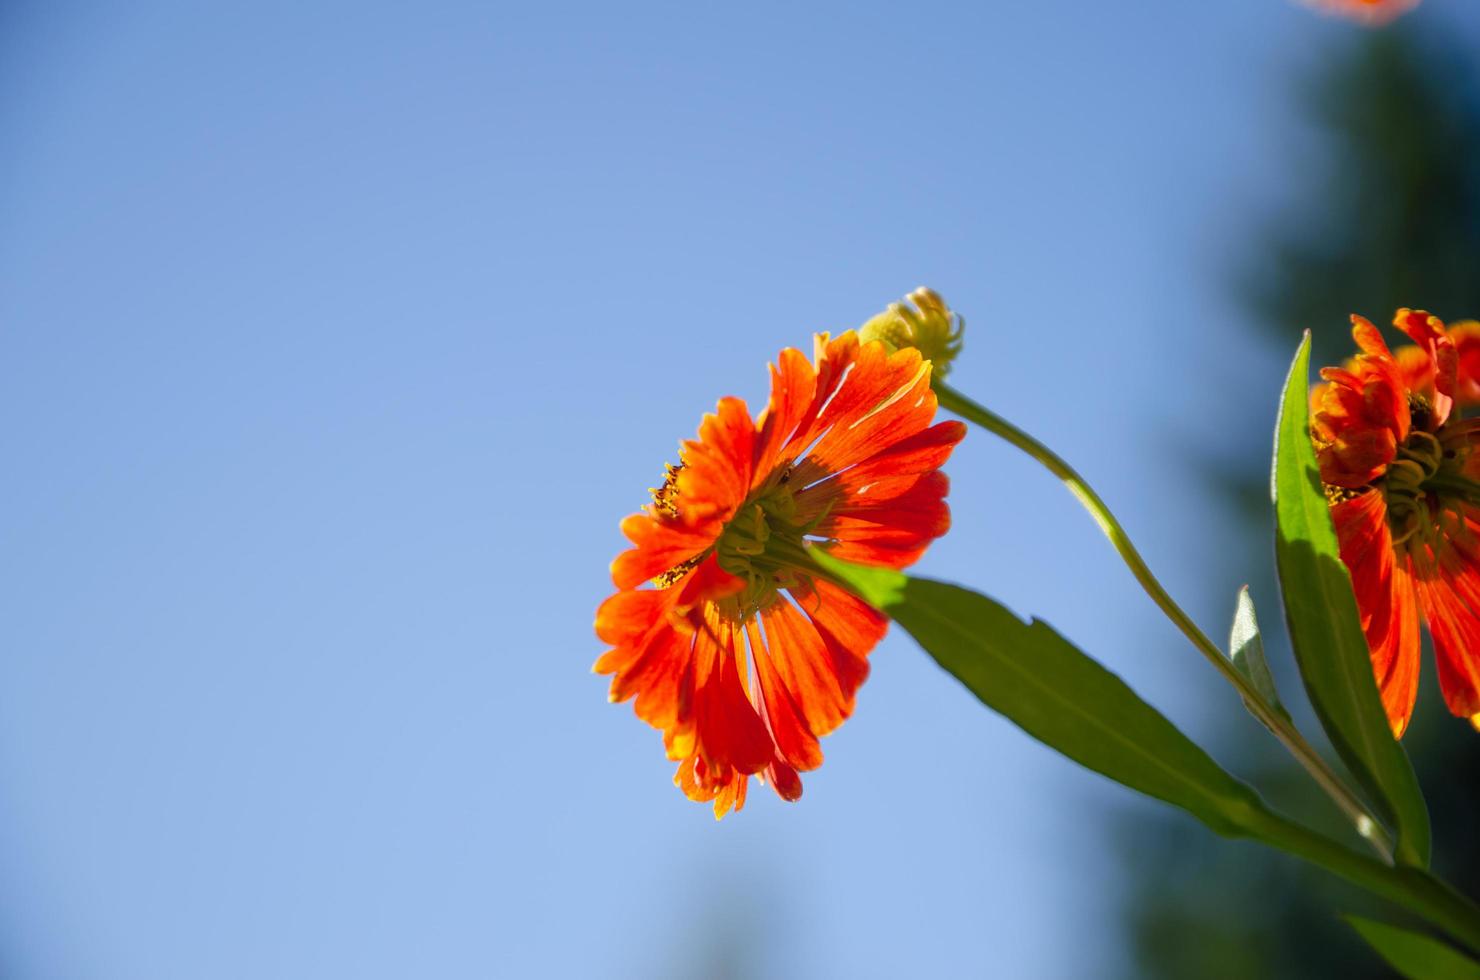 orange flower against a blue sky, natural background photo